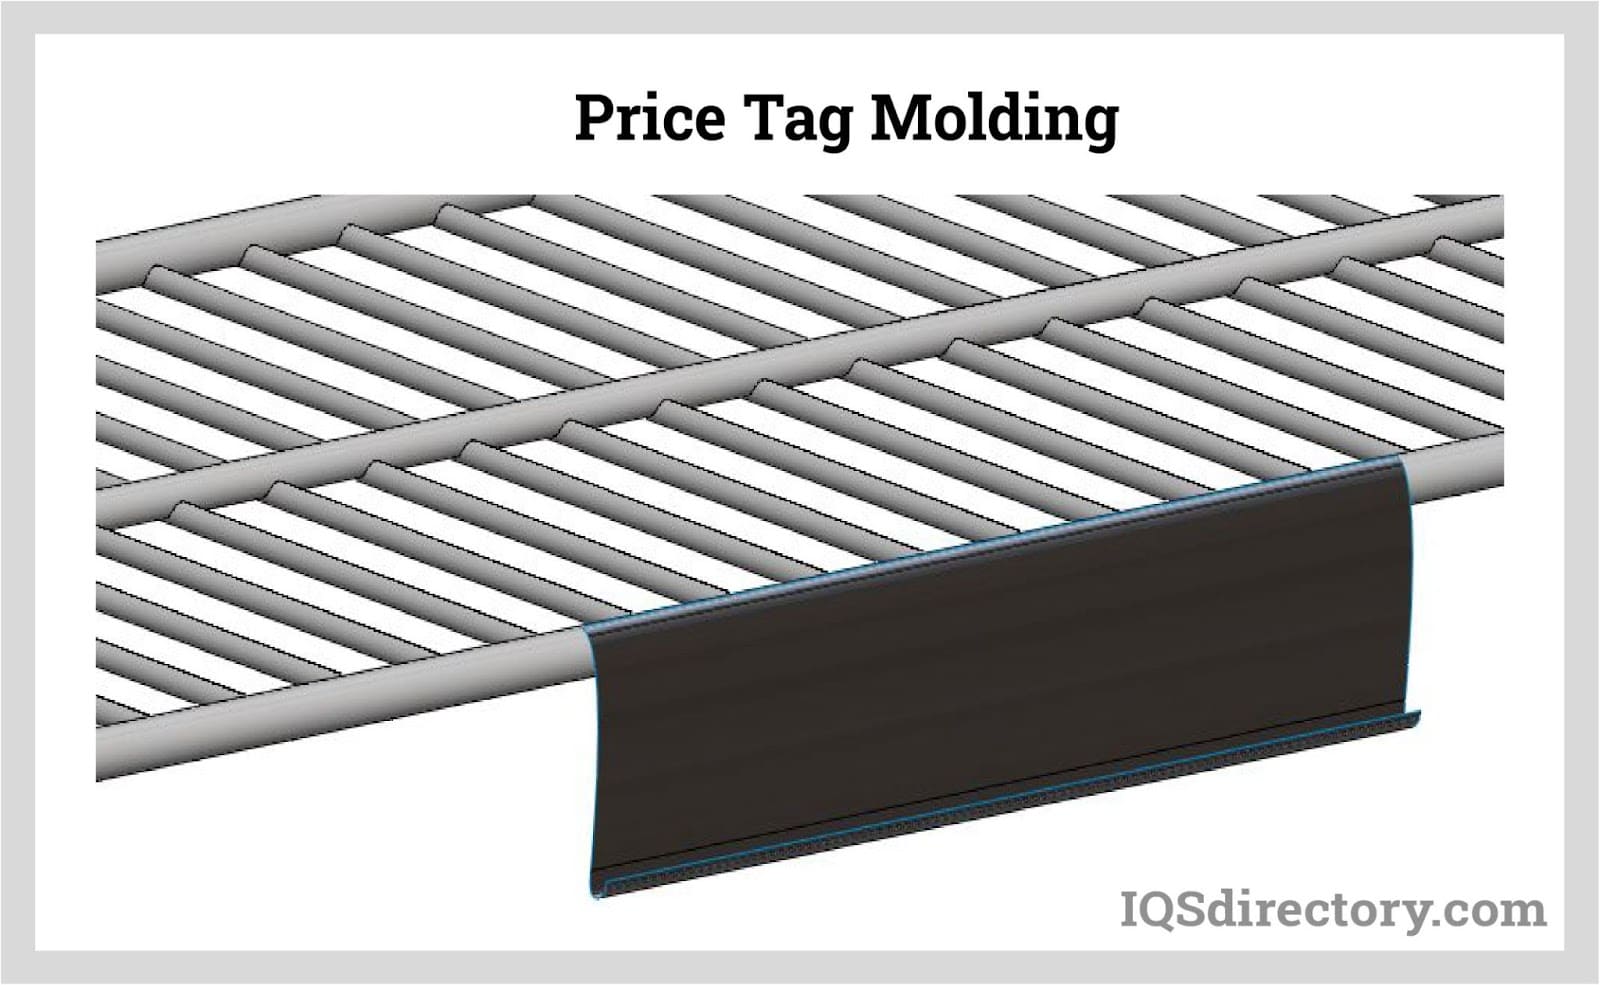 Price Tag Molding